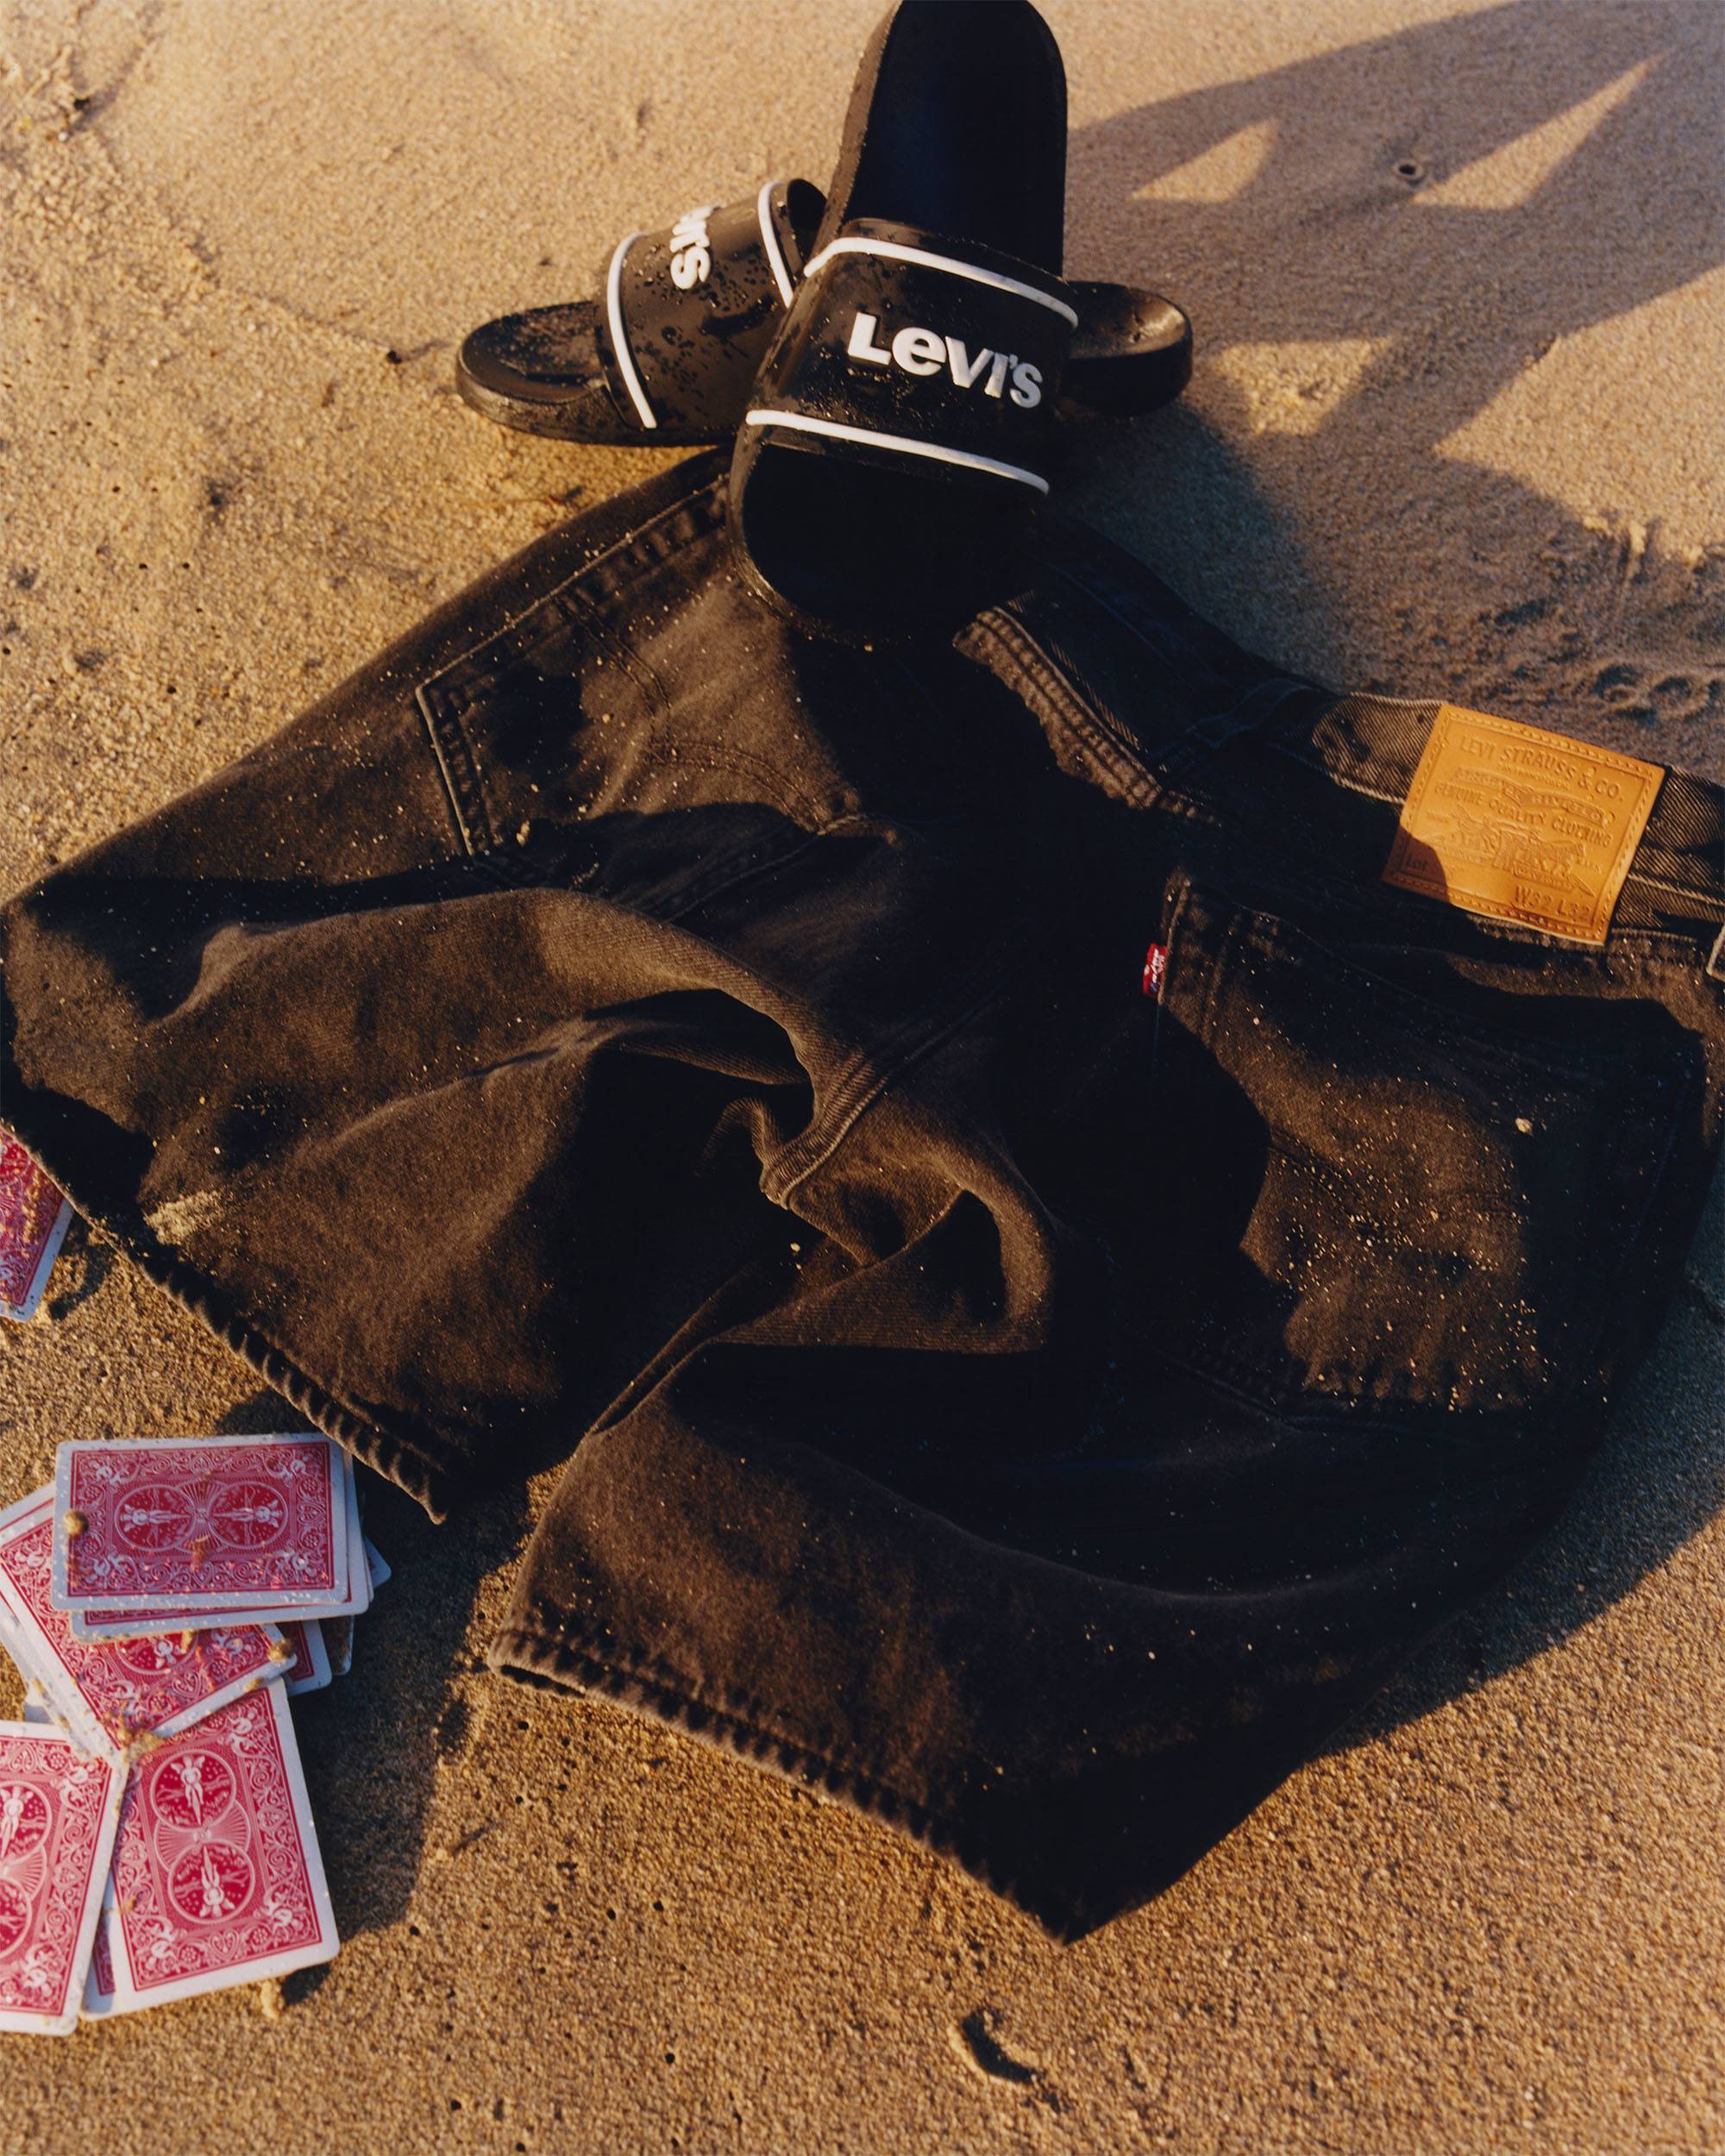 Men's black denim shorts laid out on a sandy beach